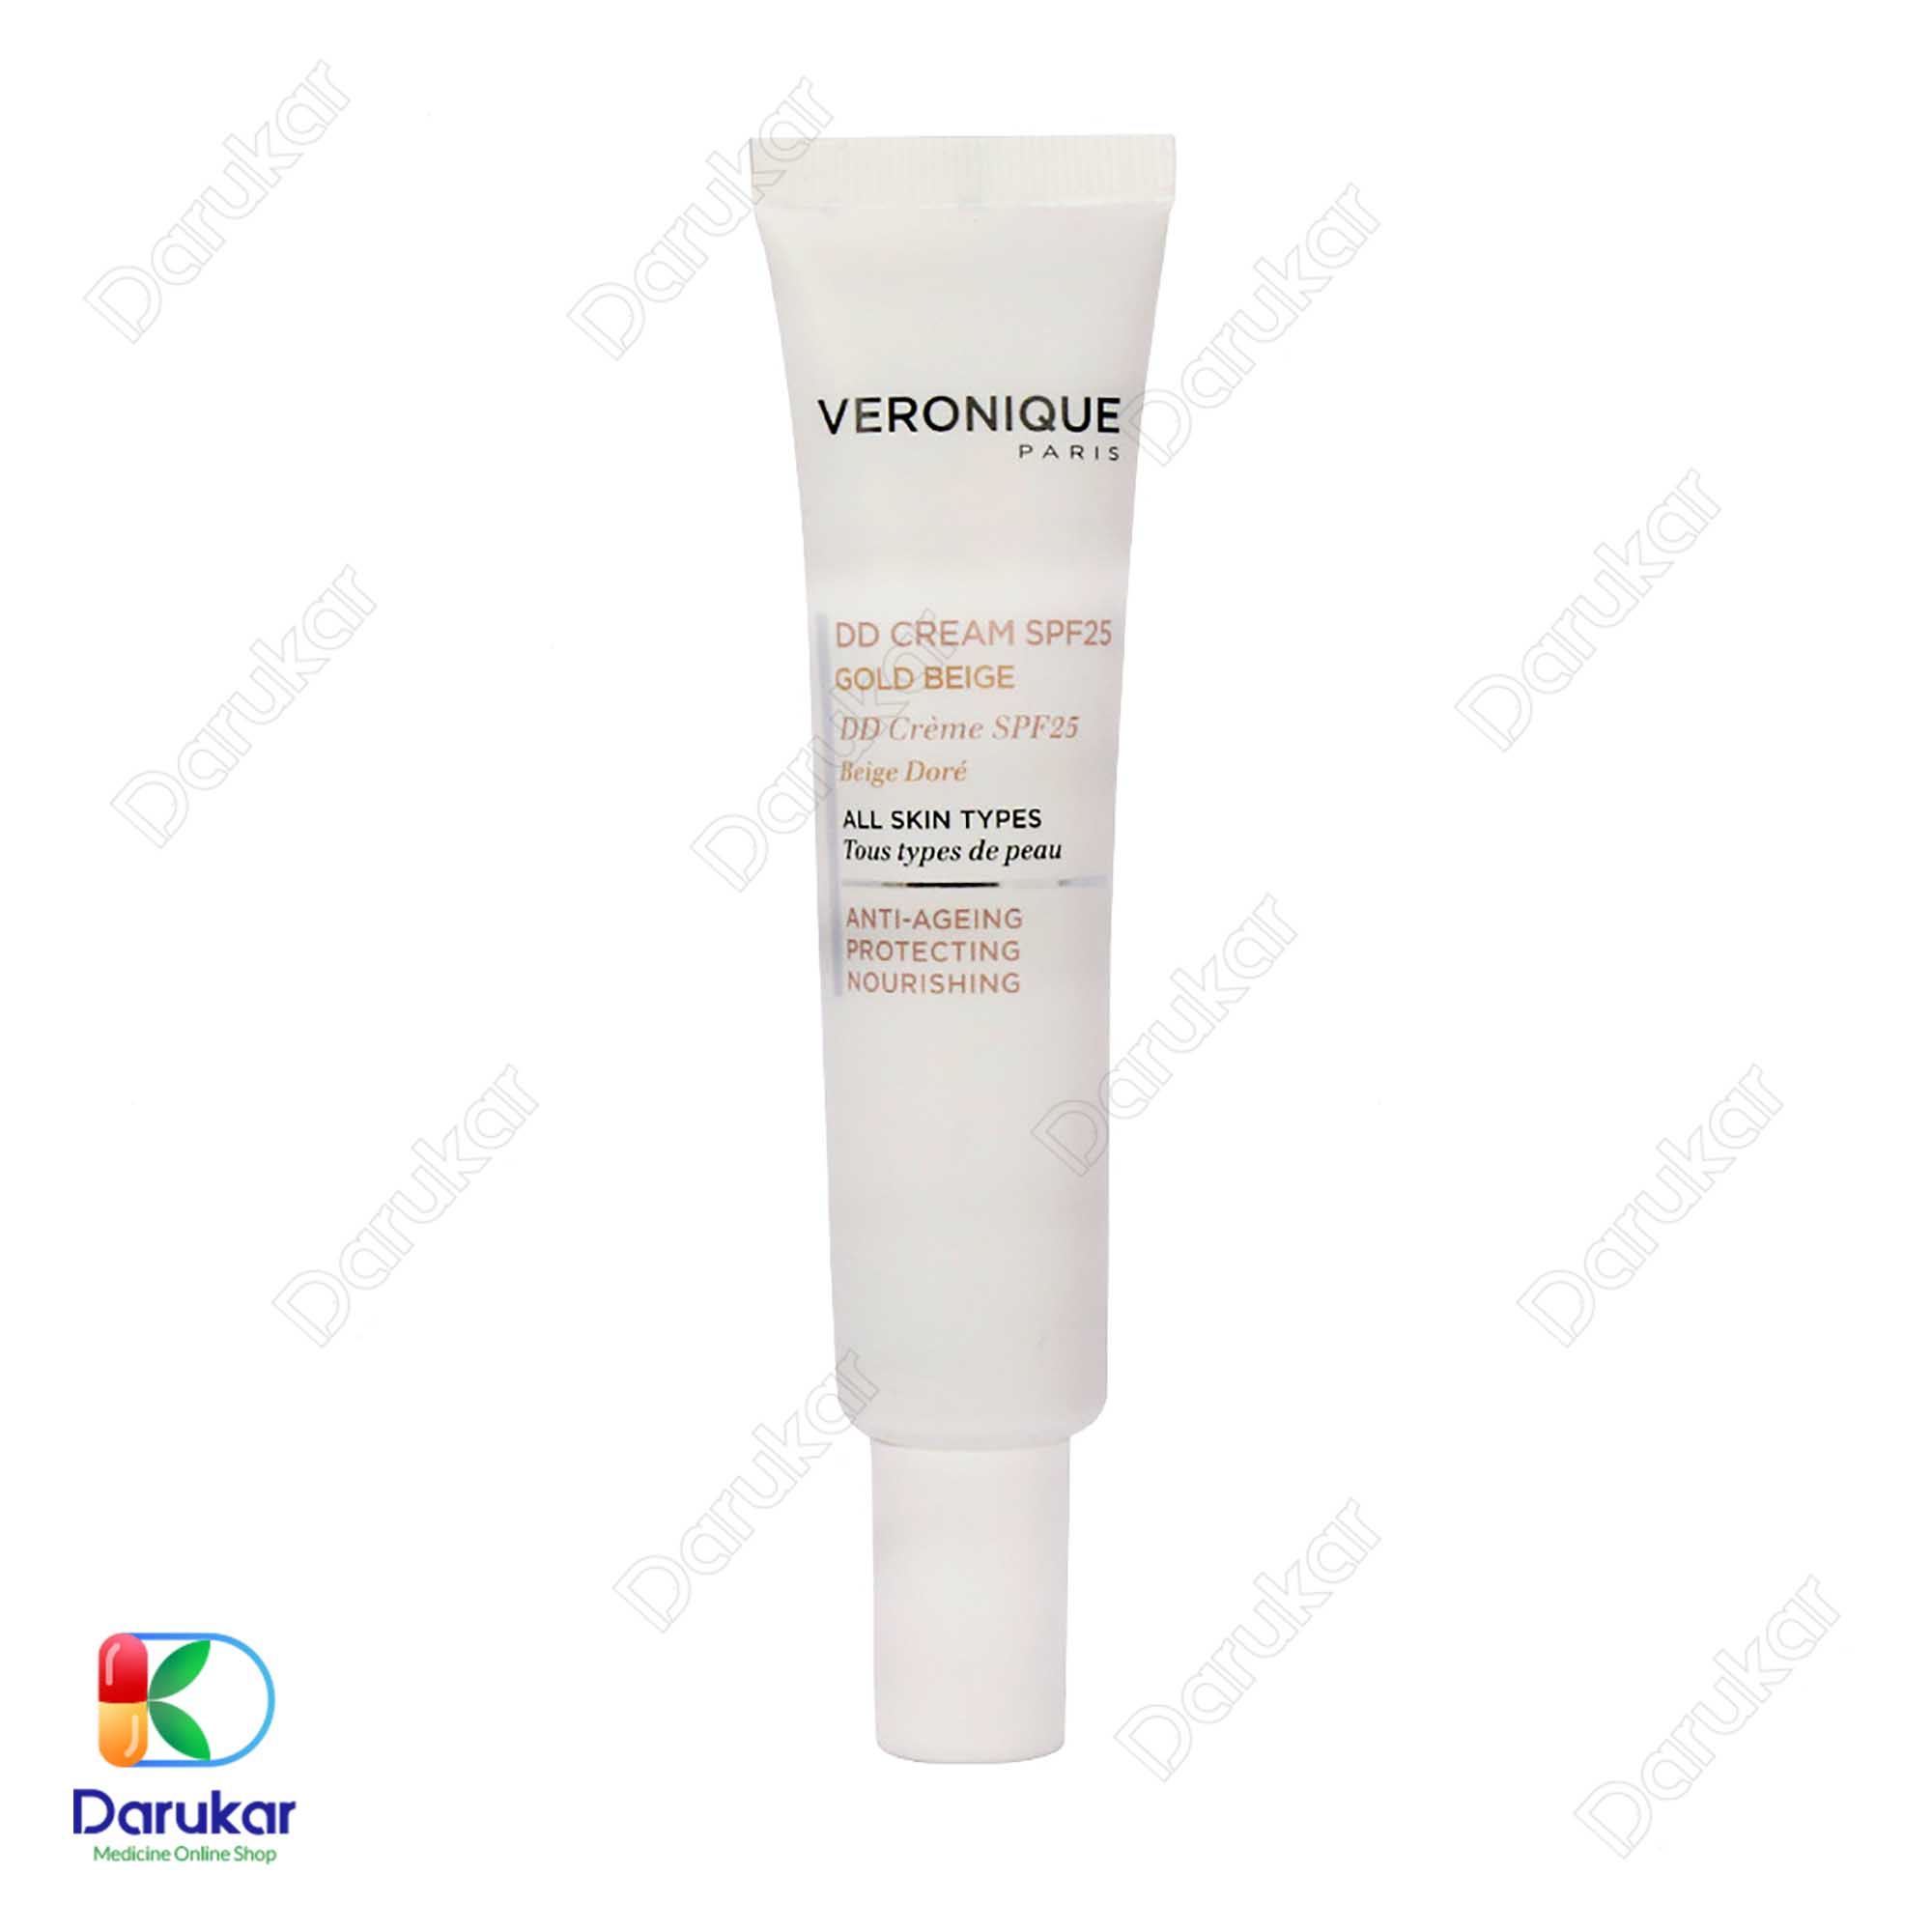 Veronique DD Cream SPF25 40 ml 4